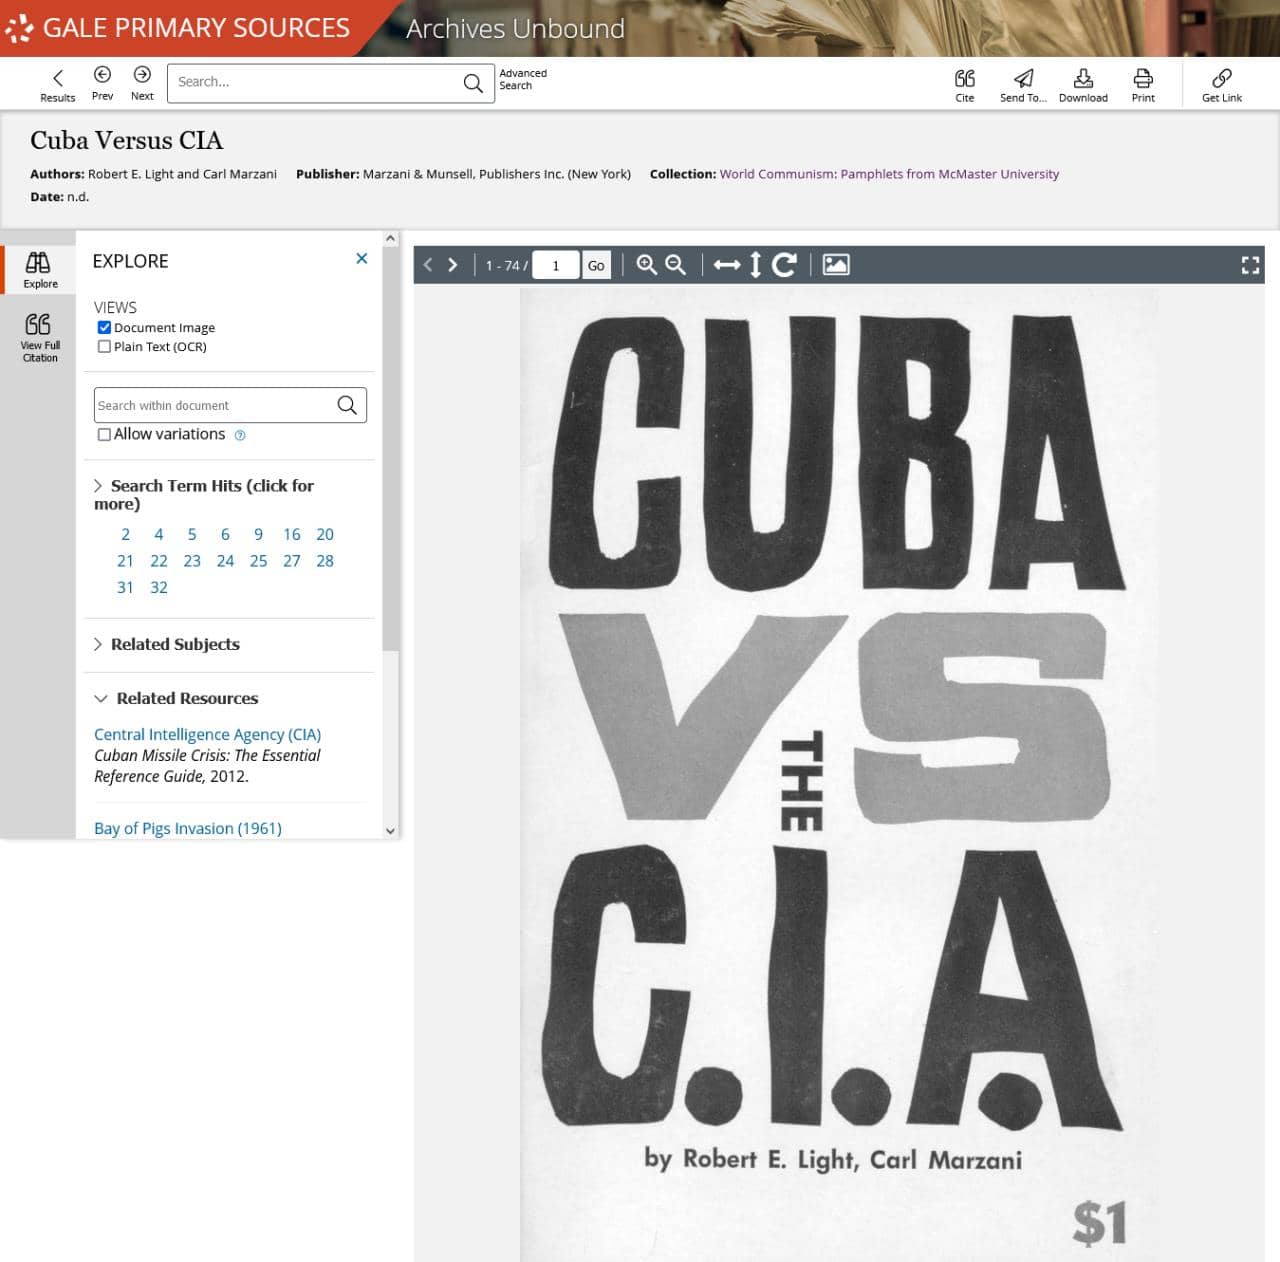 Light, Robert E., and Carl Marzani. Cuba Versus CIA. Marzani & Munsell, Publishers Inc., n.d.